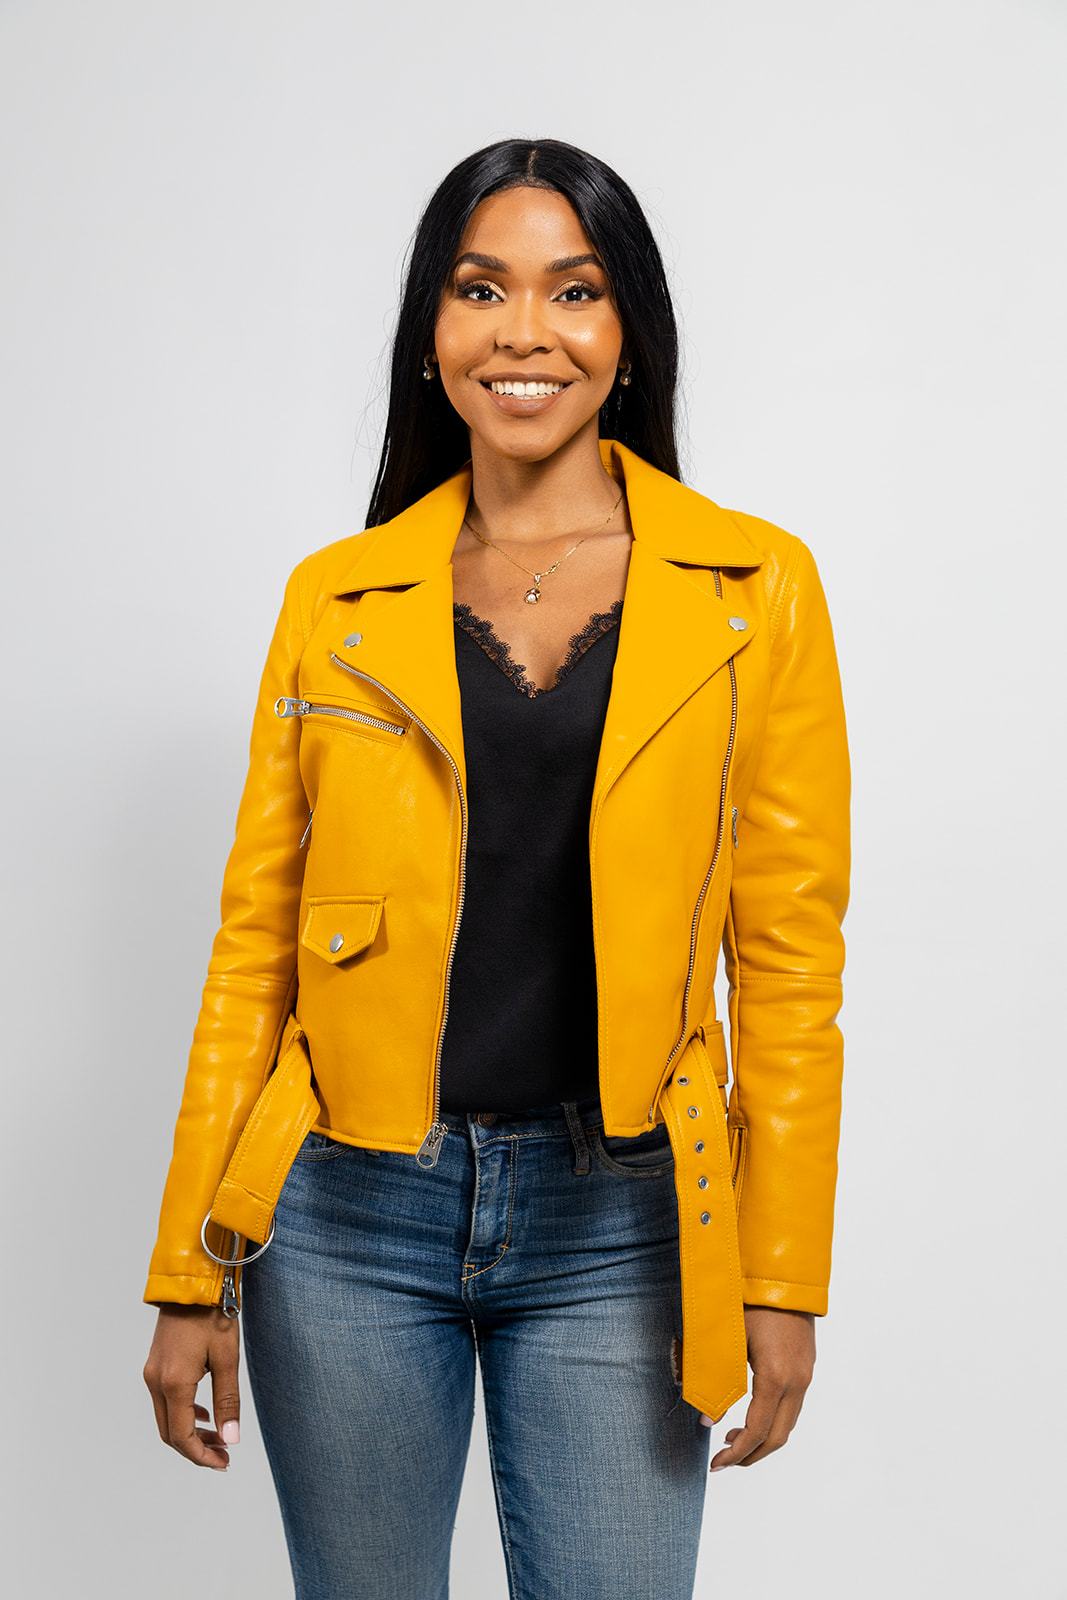 Remy - Women's Vegan Faux Leather Jacket (Mustard) Women's Fashion Leather Jacket Whet Blu NYC Mustard XS 